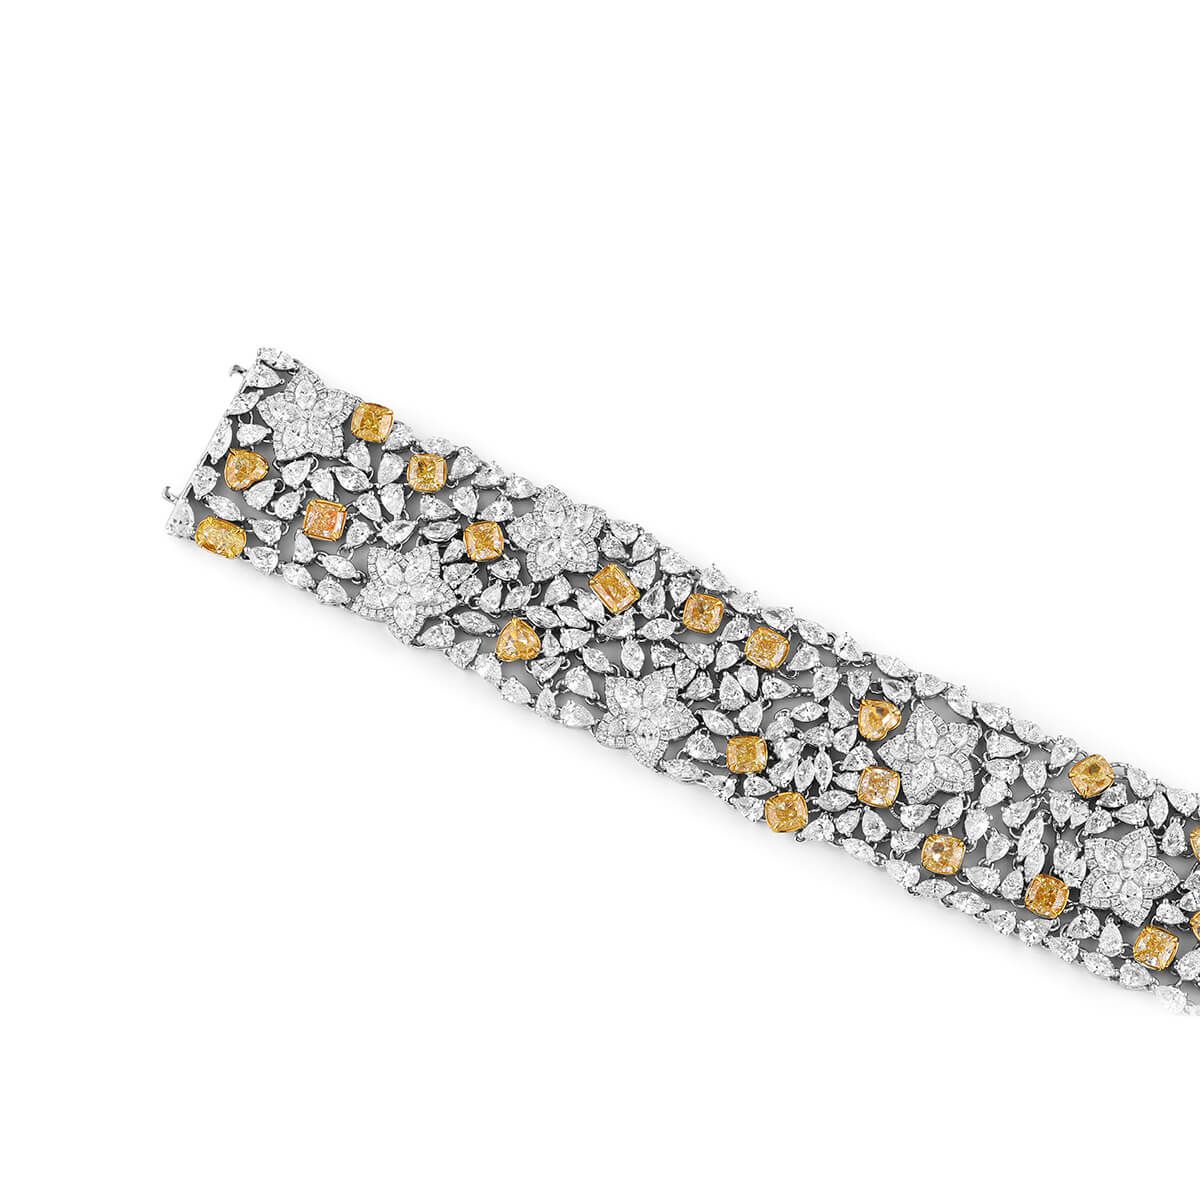  White Diamond Bracelet, 33.63 Ct. (35.14 Ct. TW), Pear shape